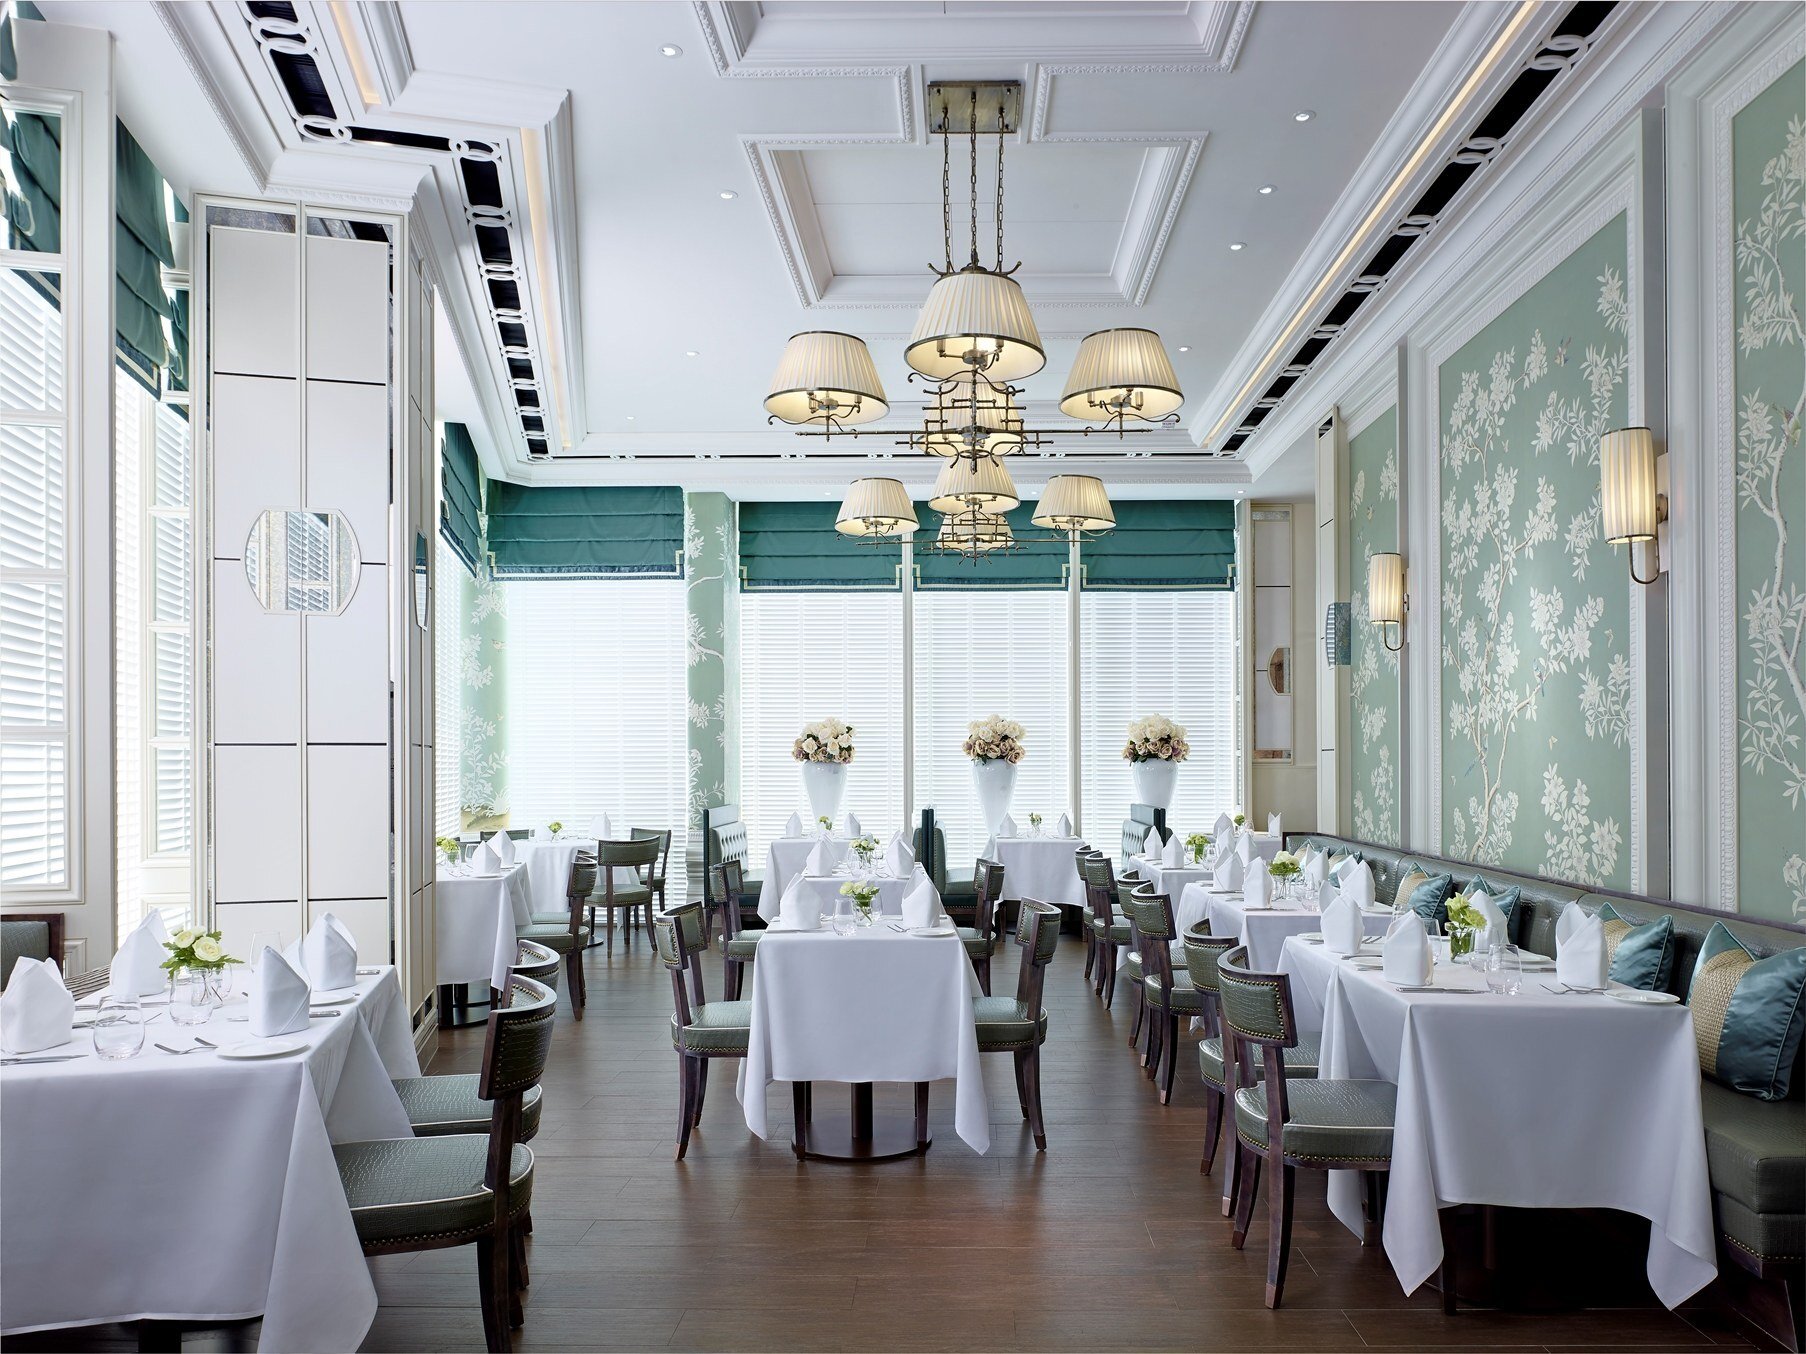 Gradini’s dining room has sleek and minimalist decor. Photo: The Pottinger Hong Kong